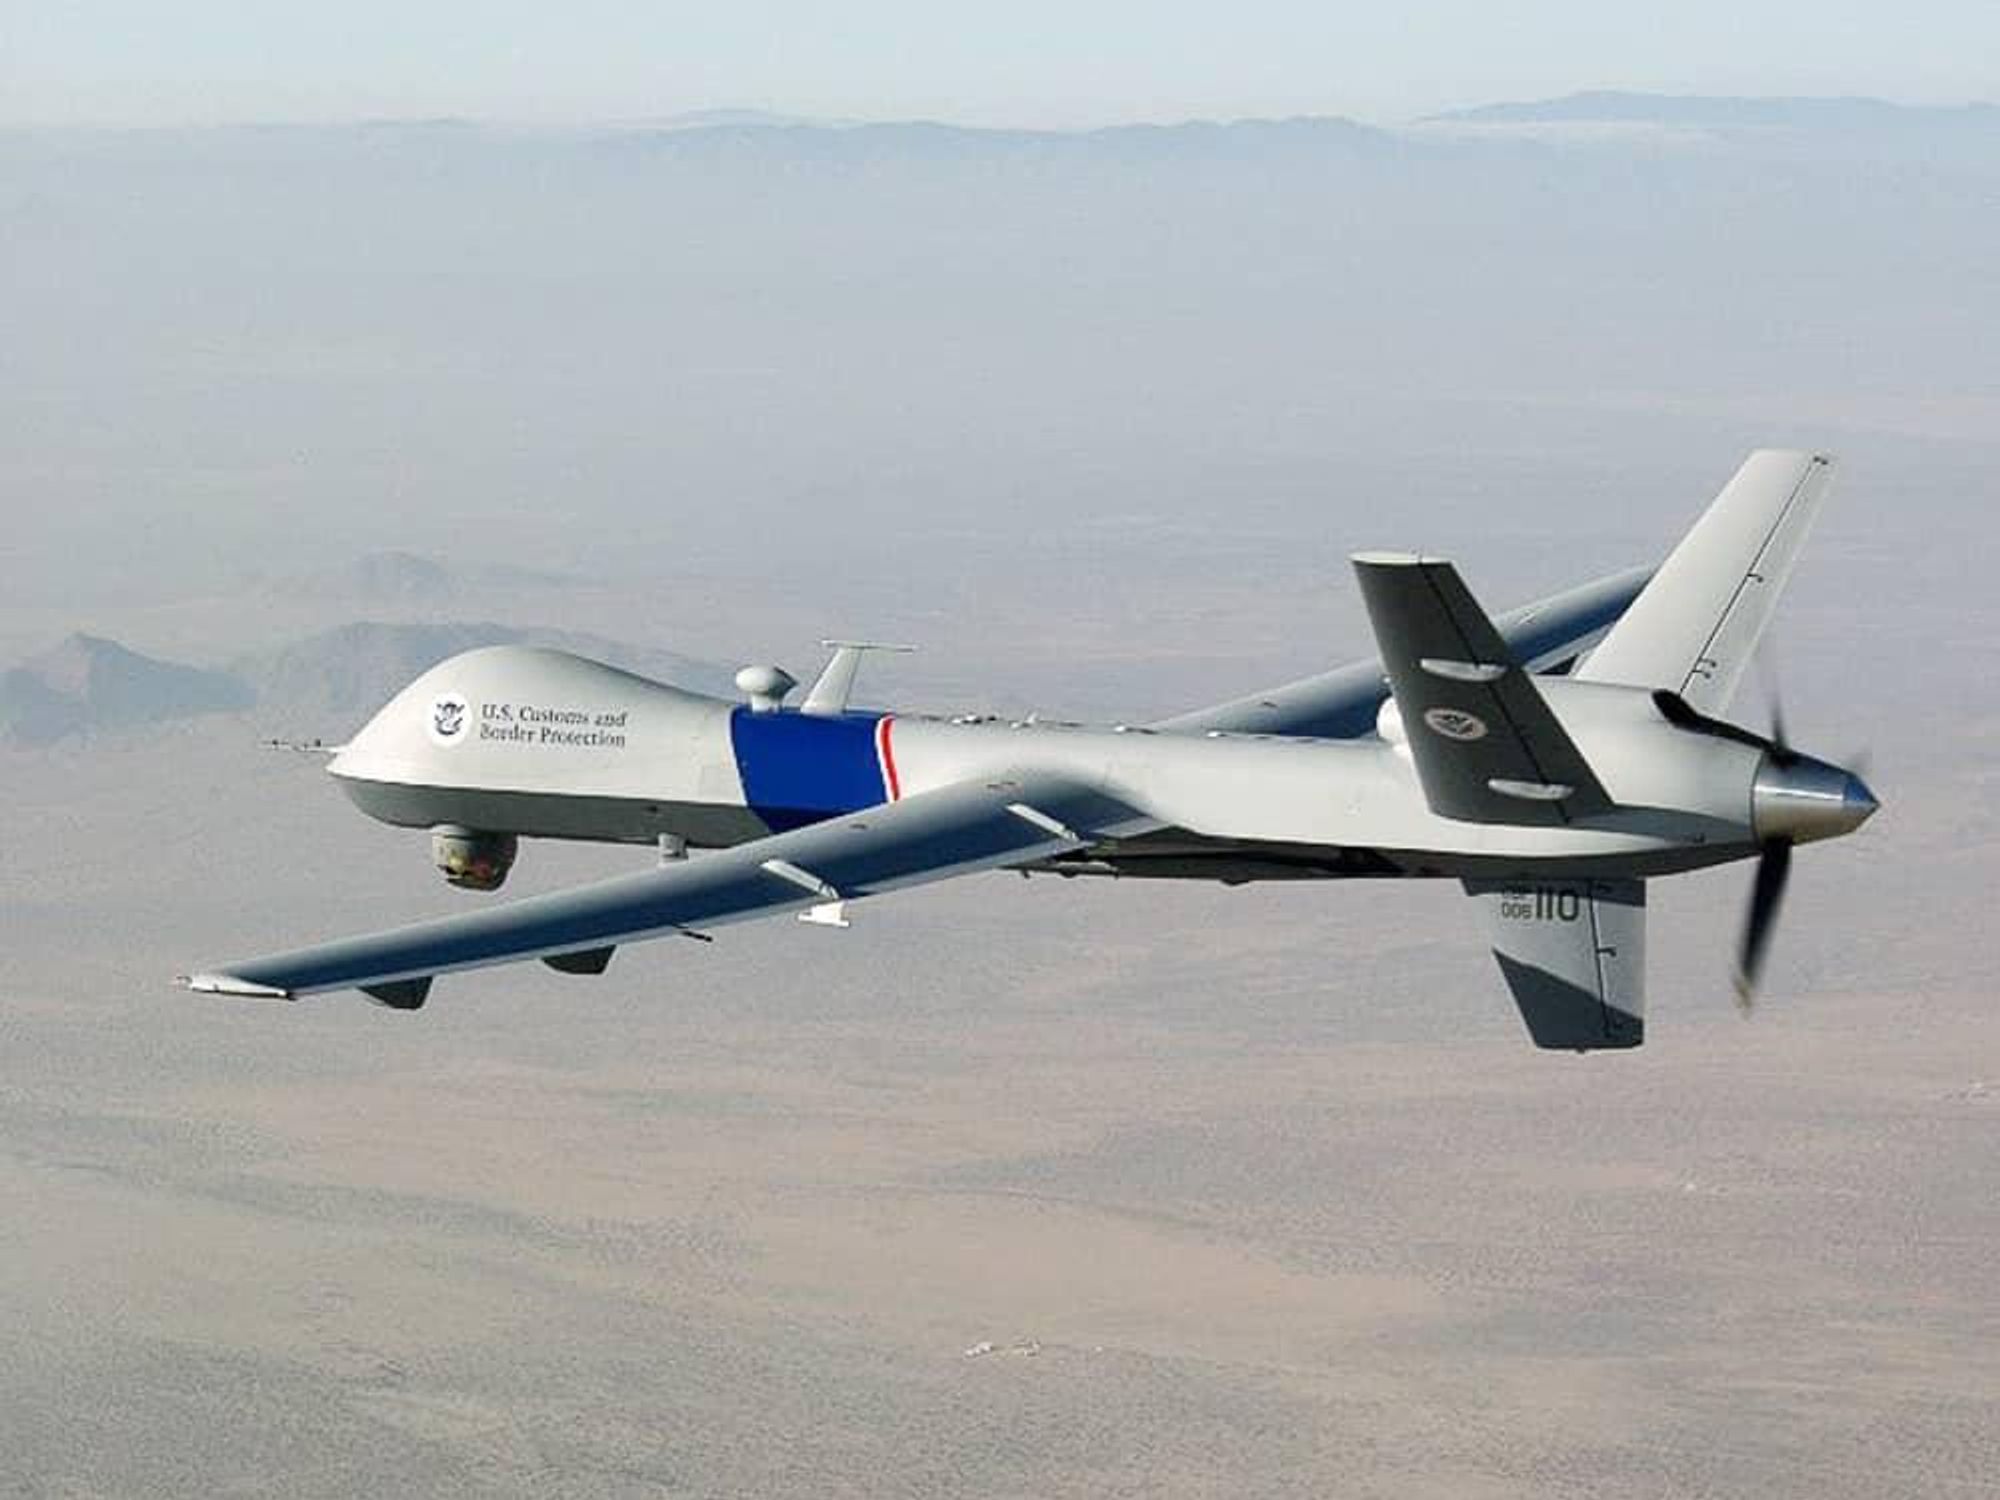 News_Drone_MQ-9_Reaper_unmanned plane_border patrol